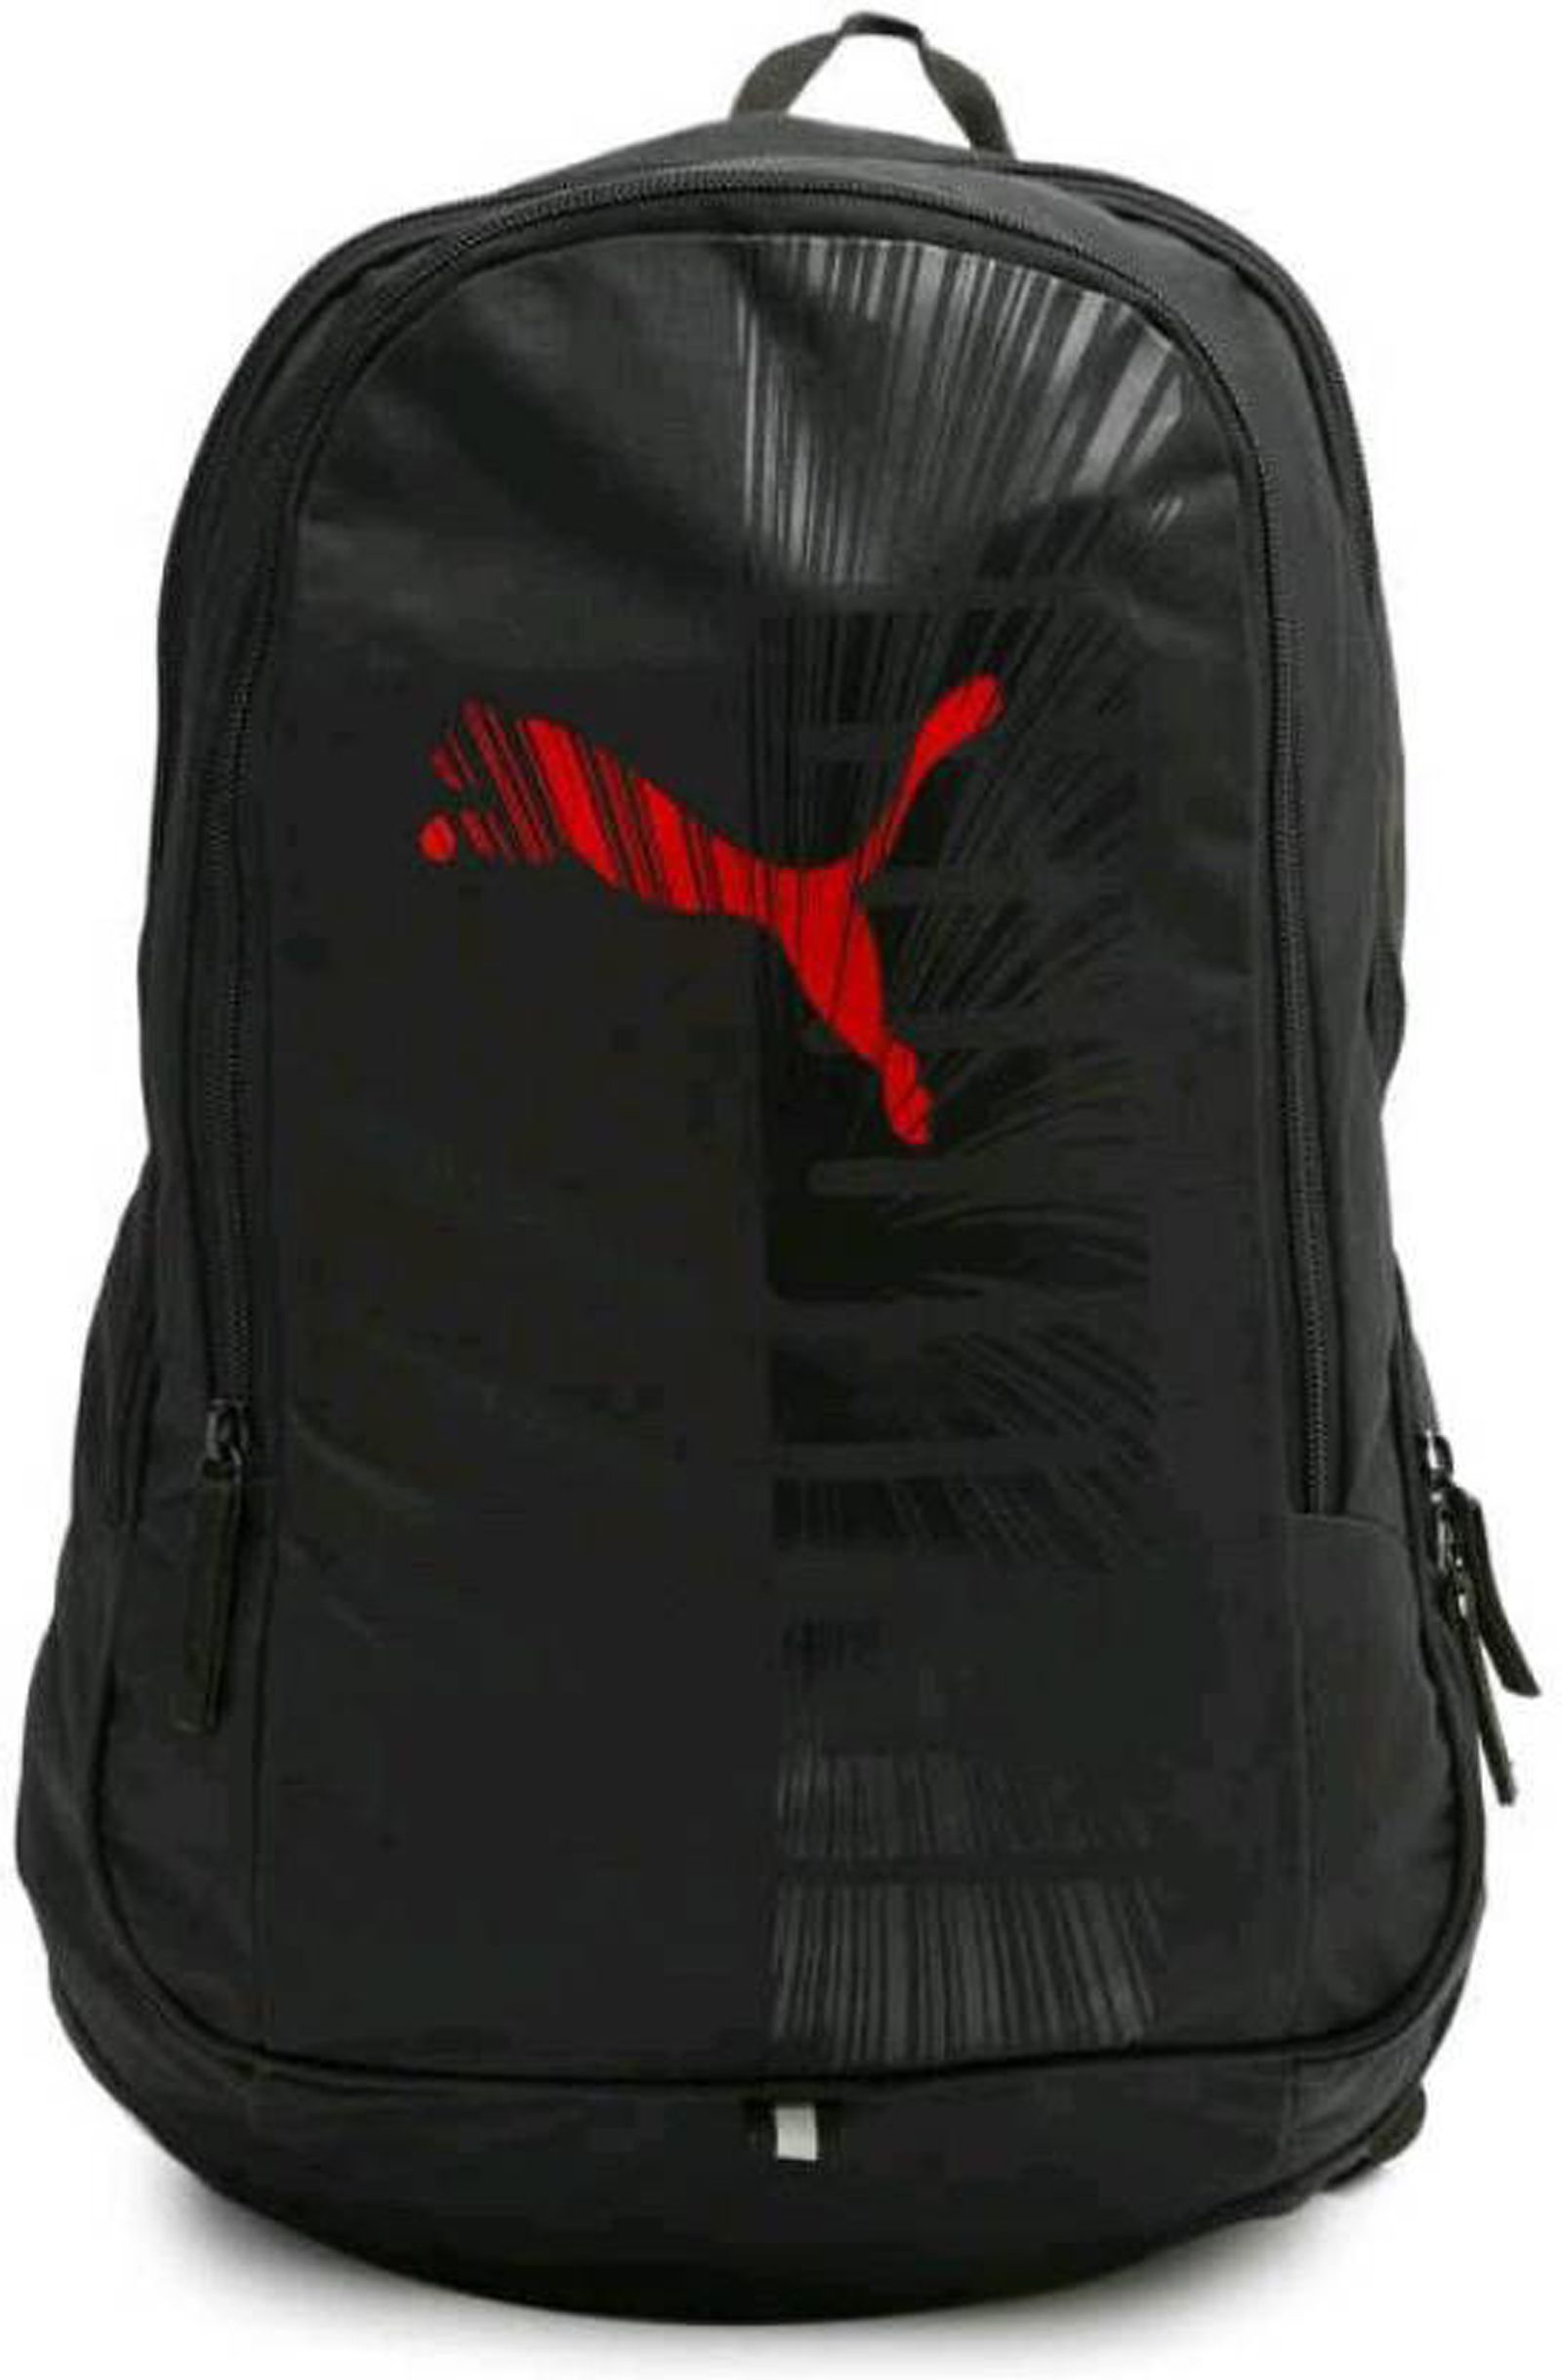 puma school bags online